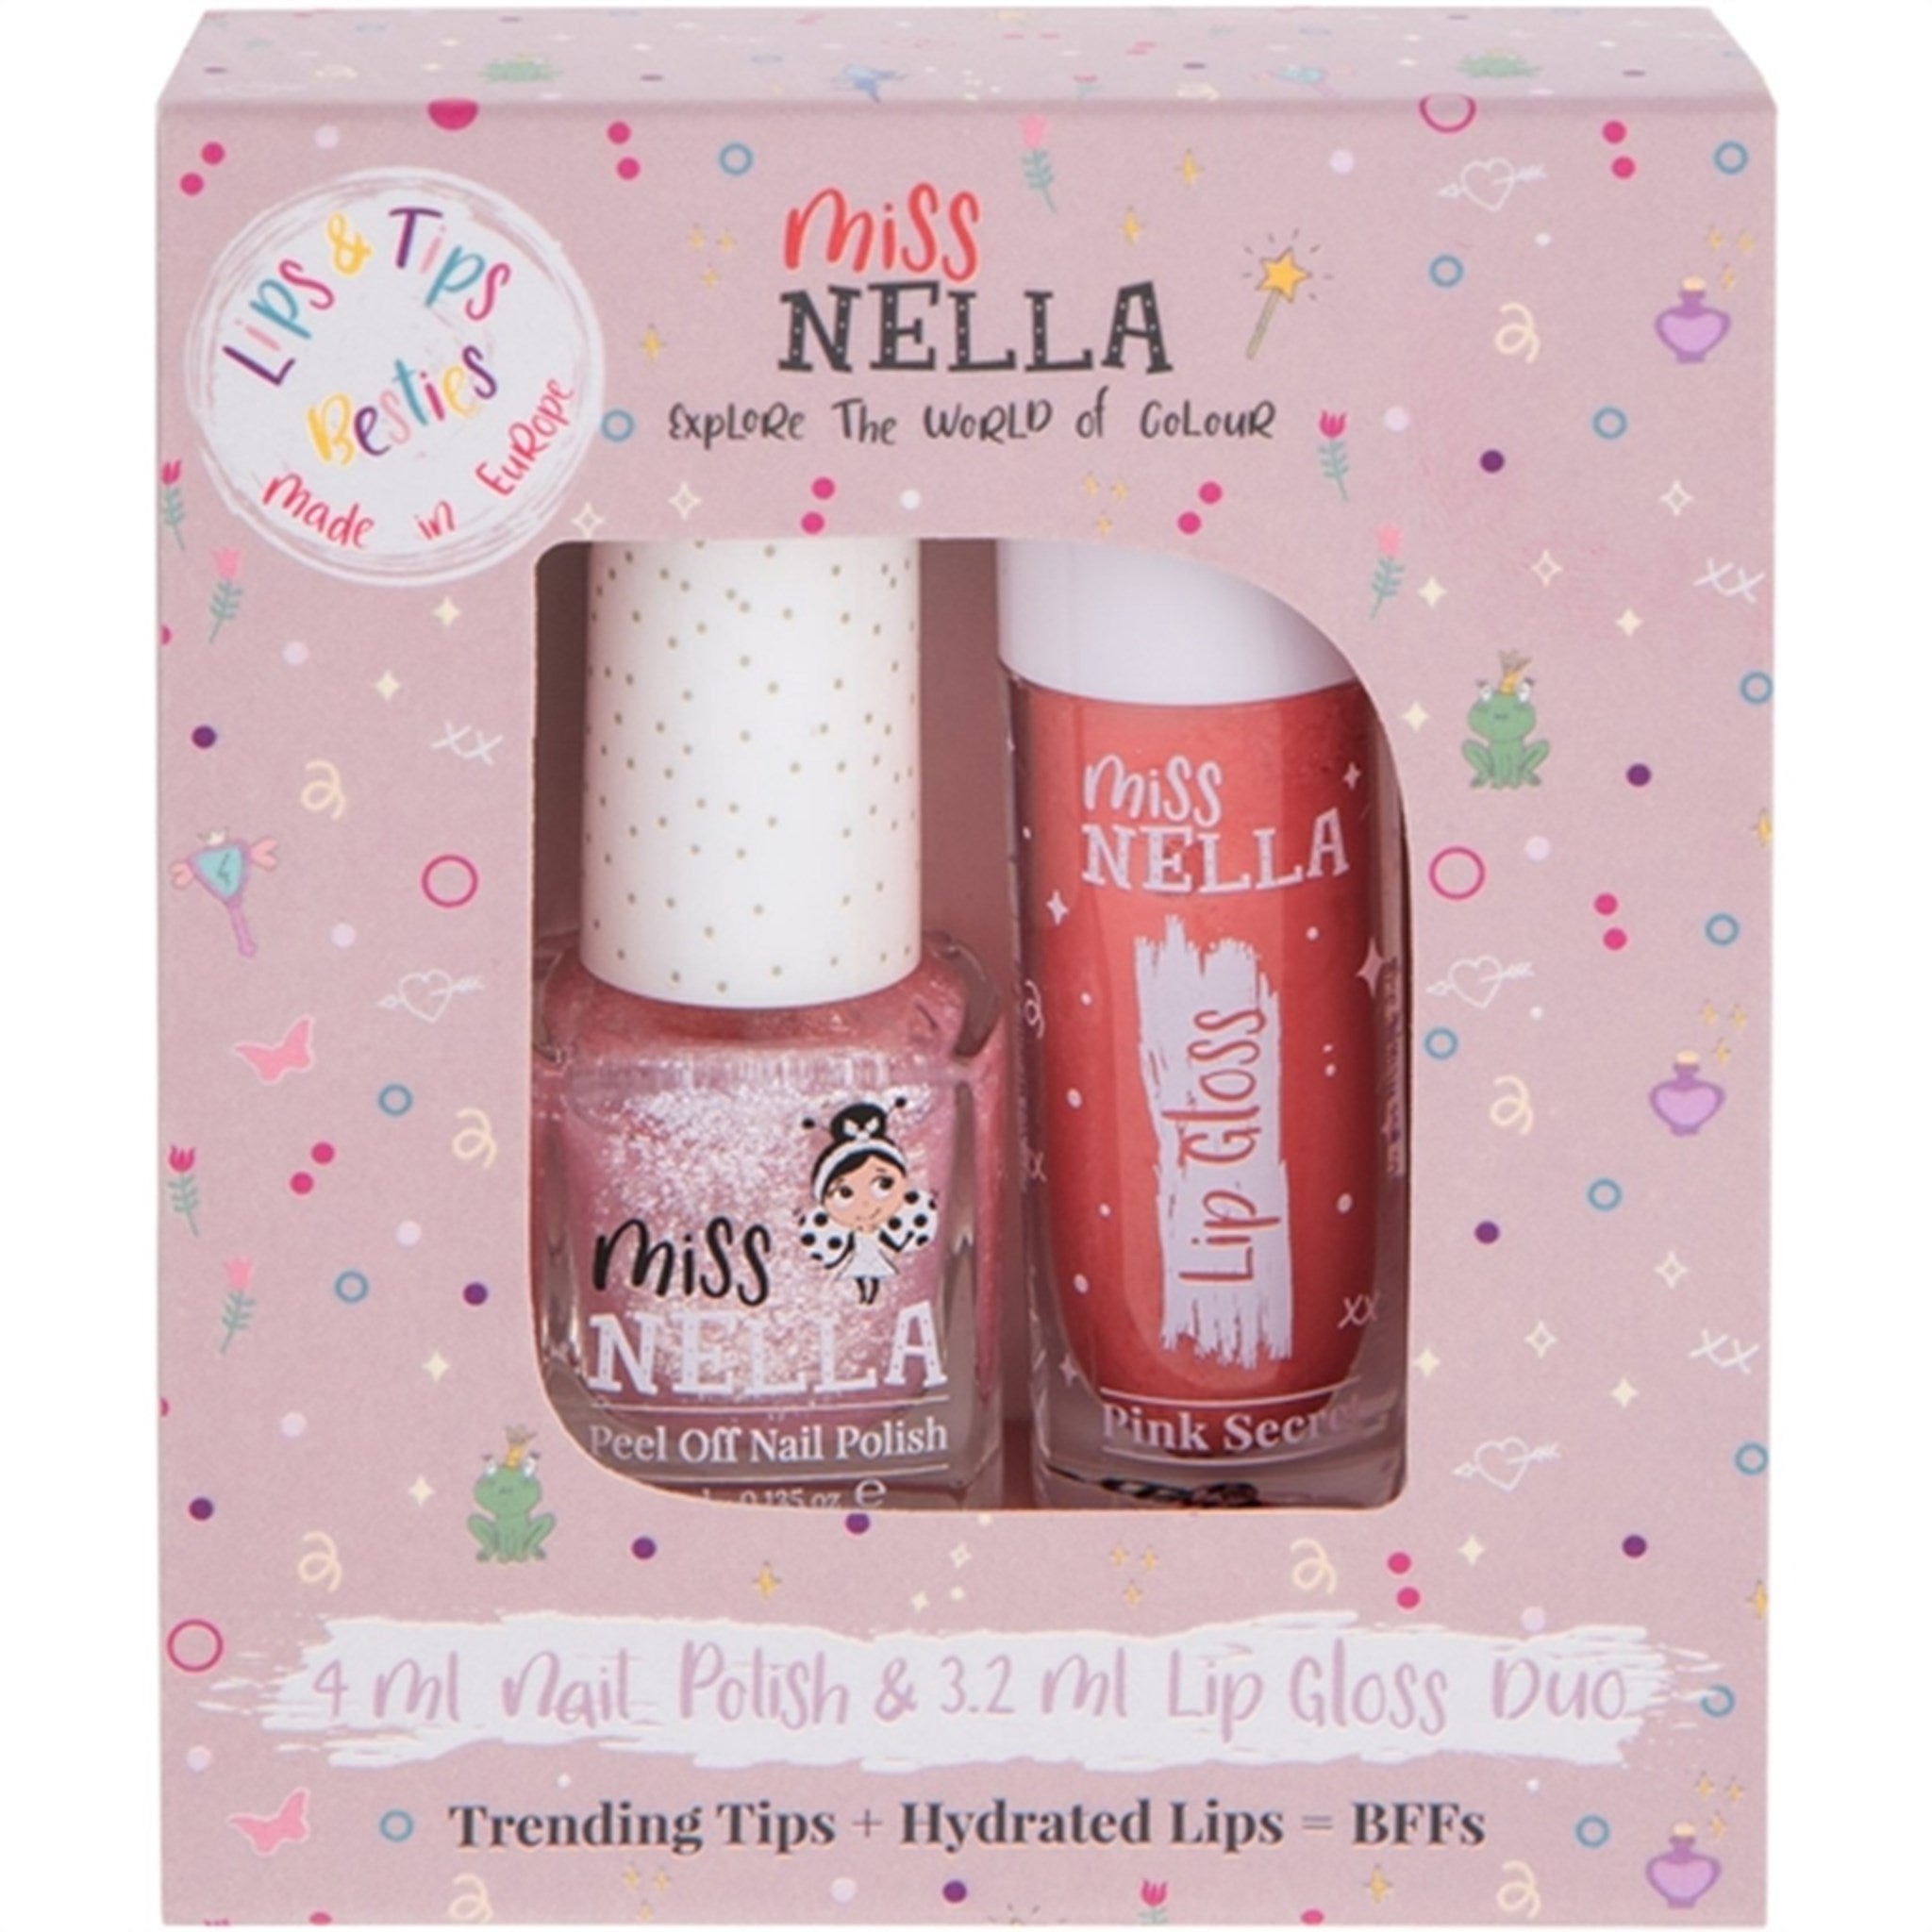 Miss Nella Lip Gloss Pink Secret + Nail Polish Itsy Glitzy Hippo